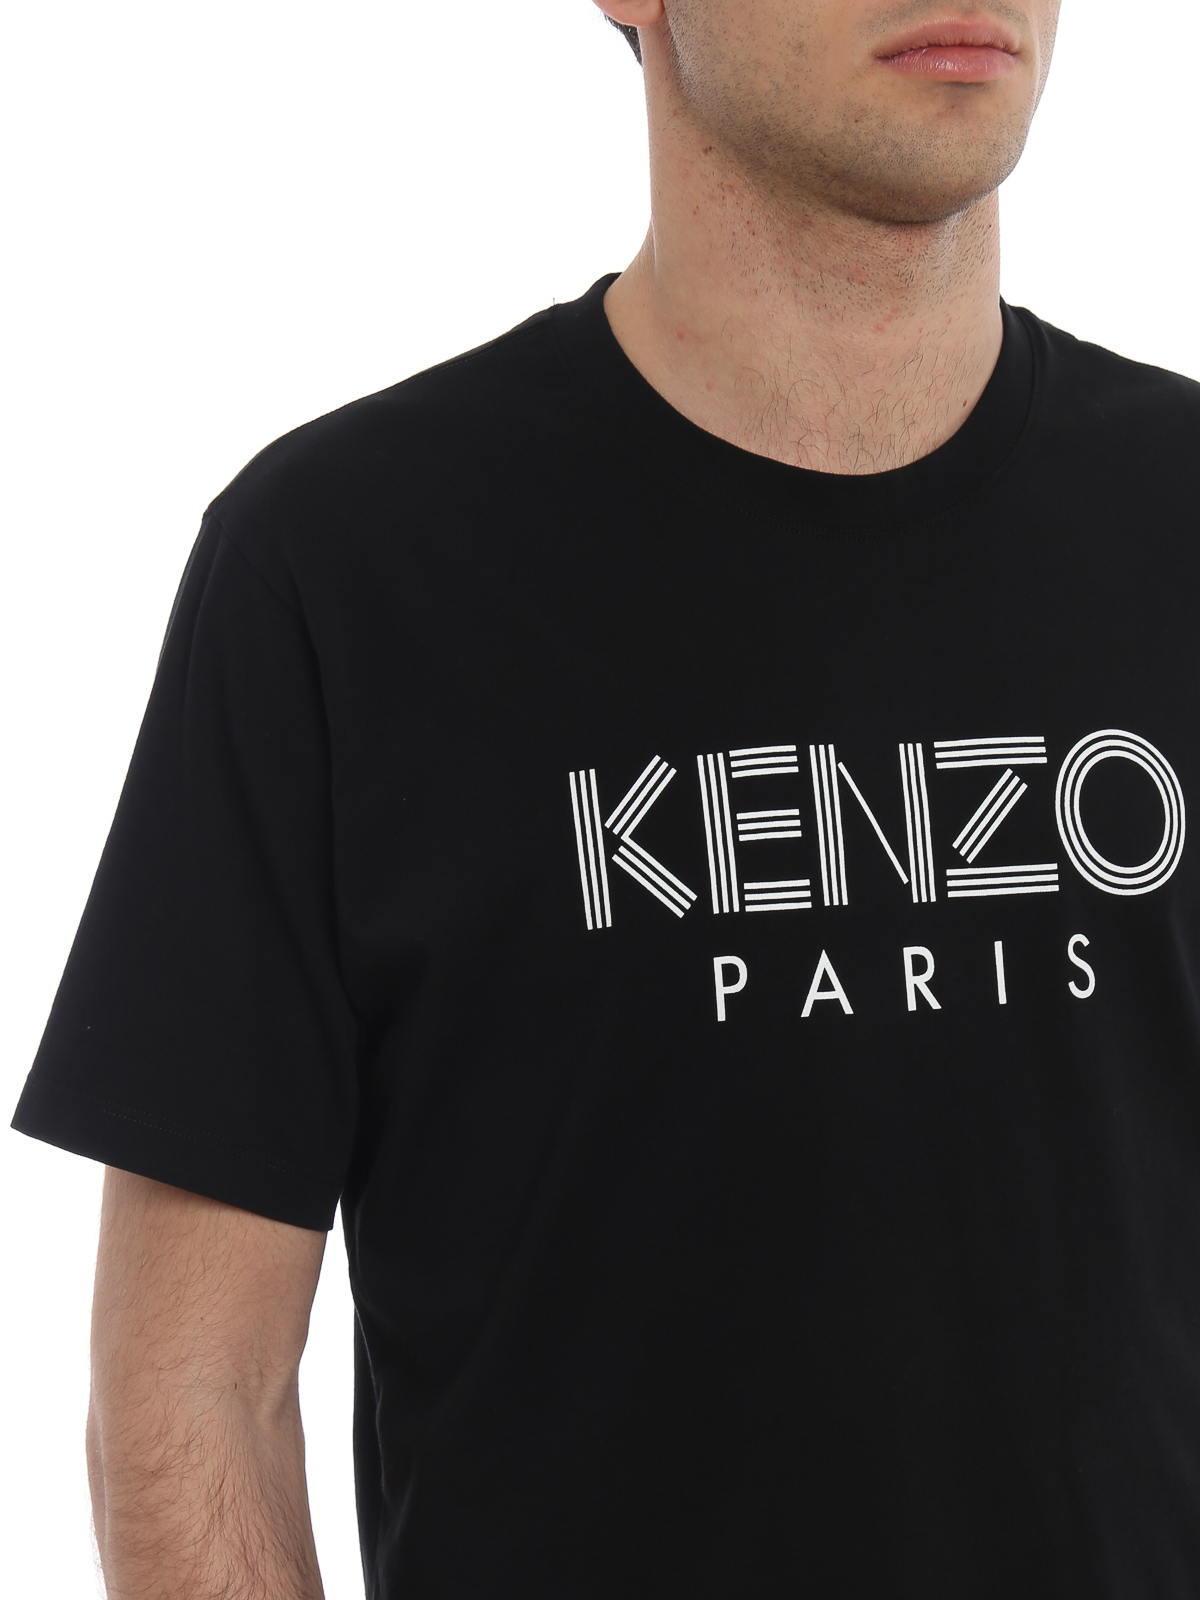 kenzo paris t shirt black